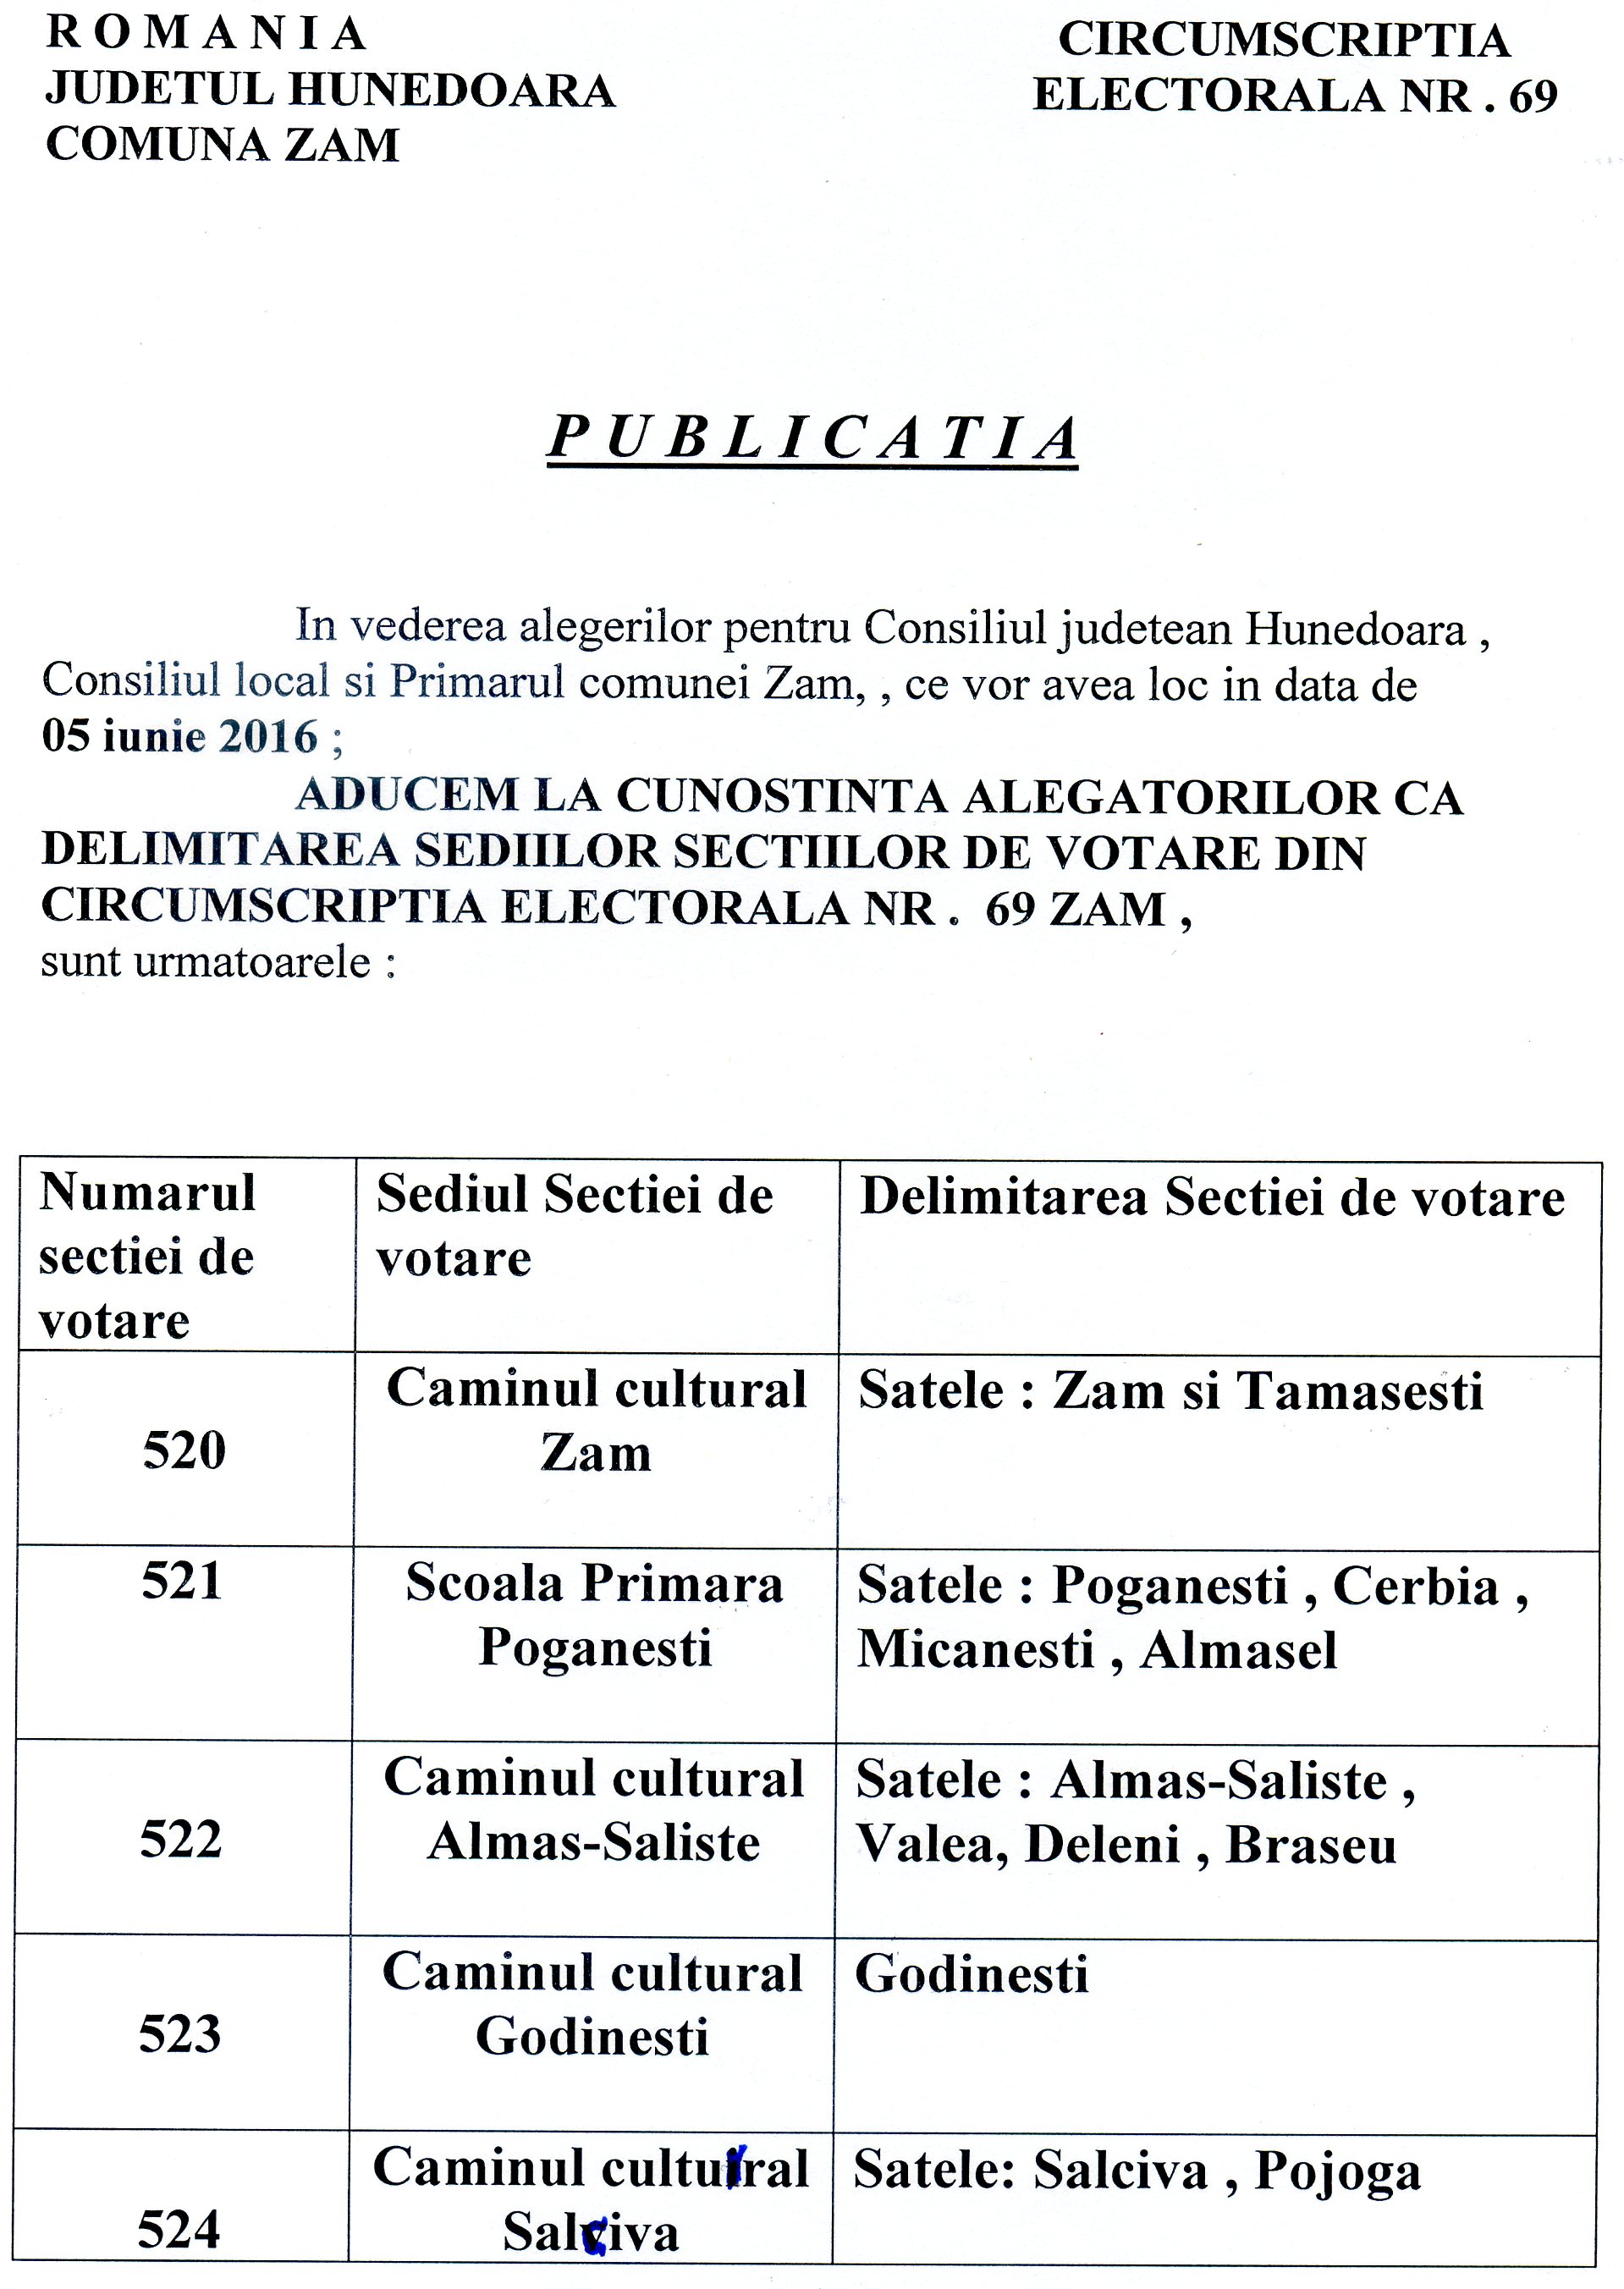 Delimitare sedii sectii votare Comuna Zam - 05 iunie 2016 - Consiliul jud. HD